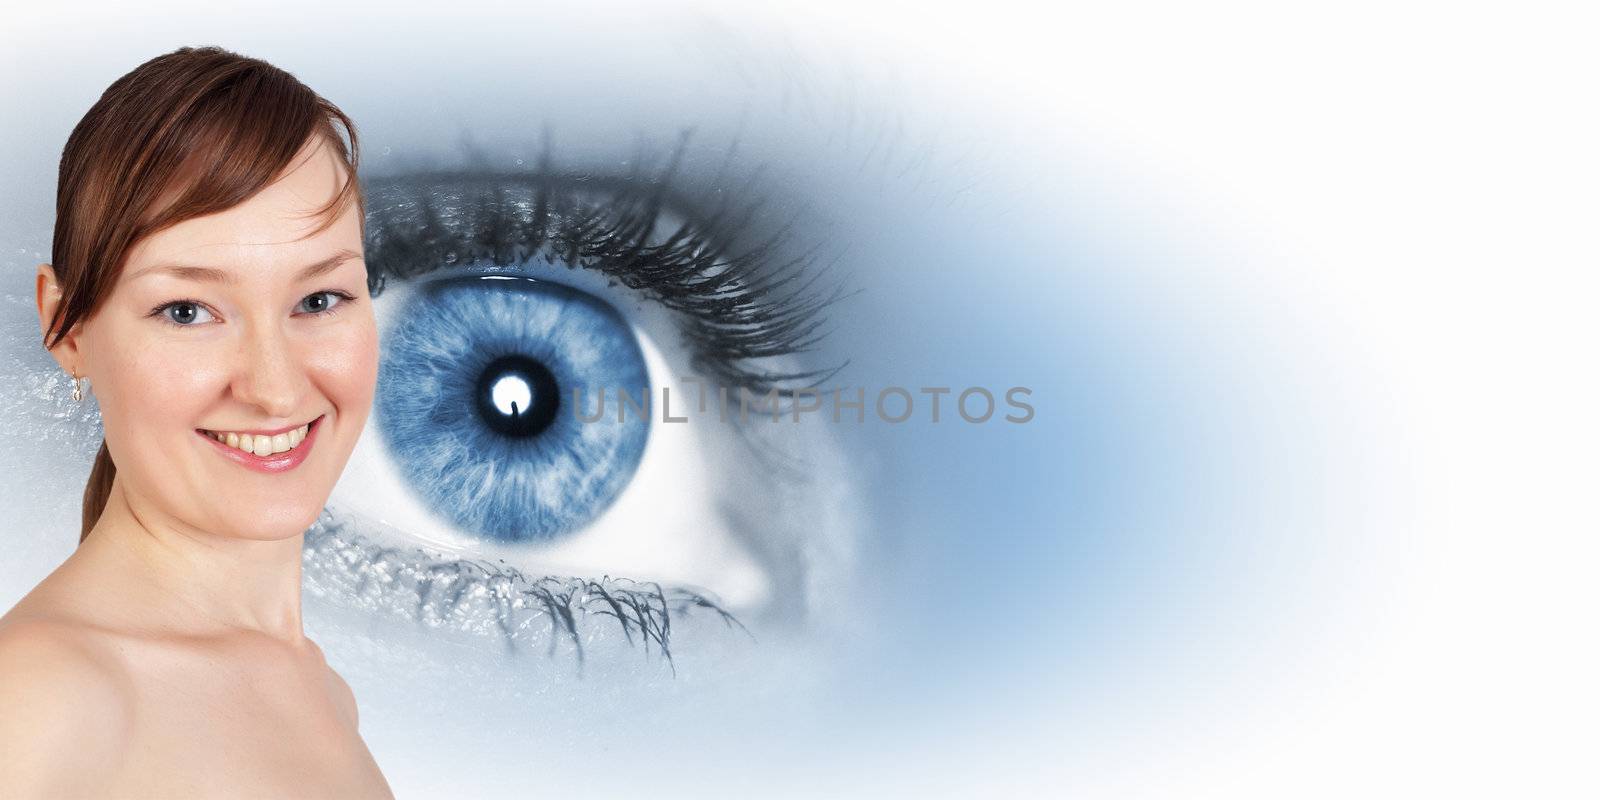 Human eye on white background with female